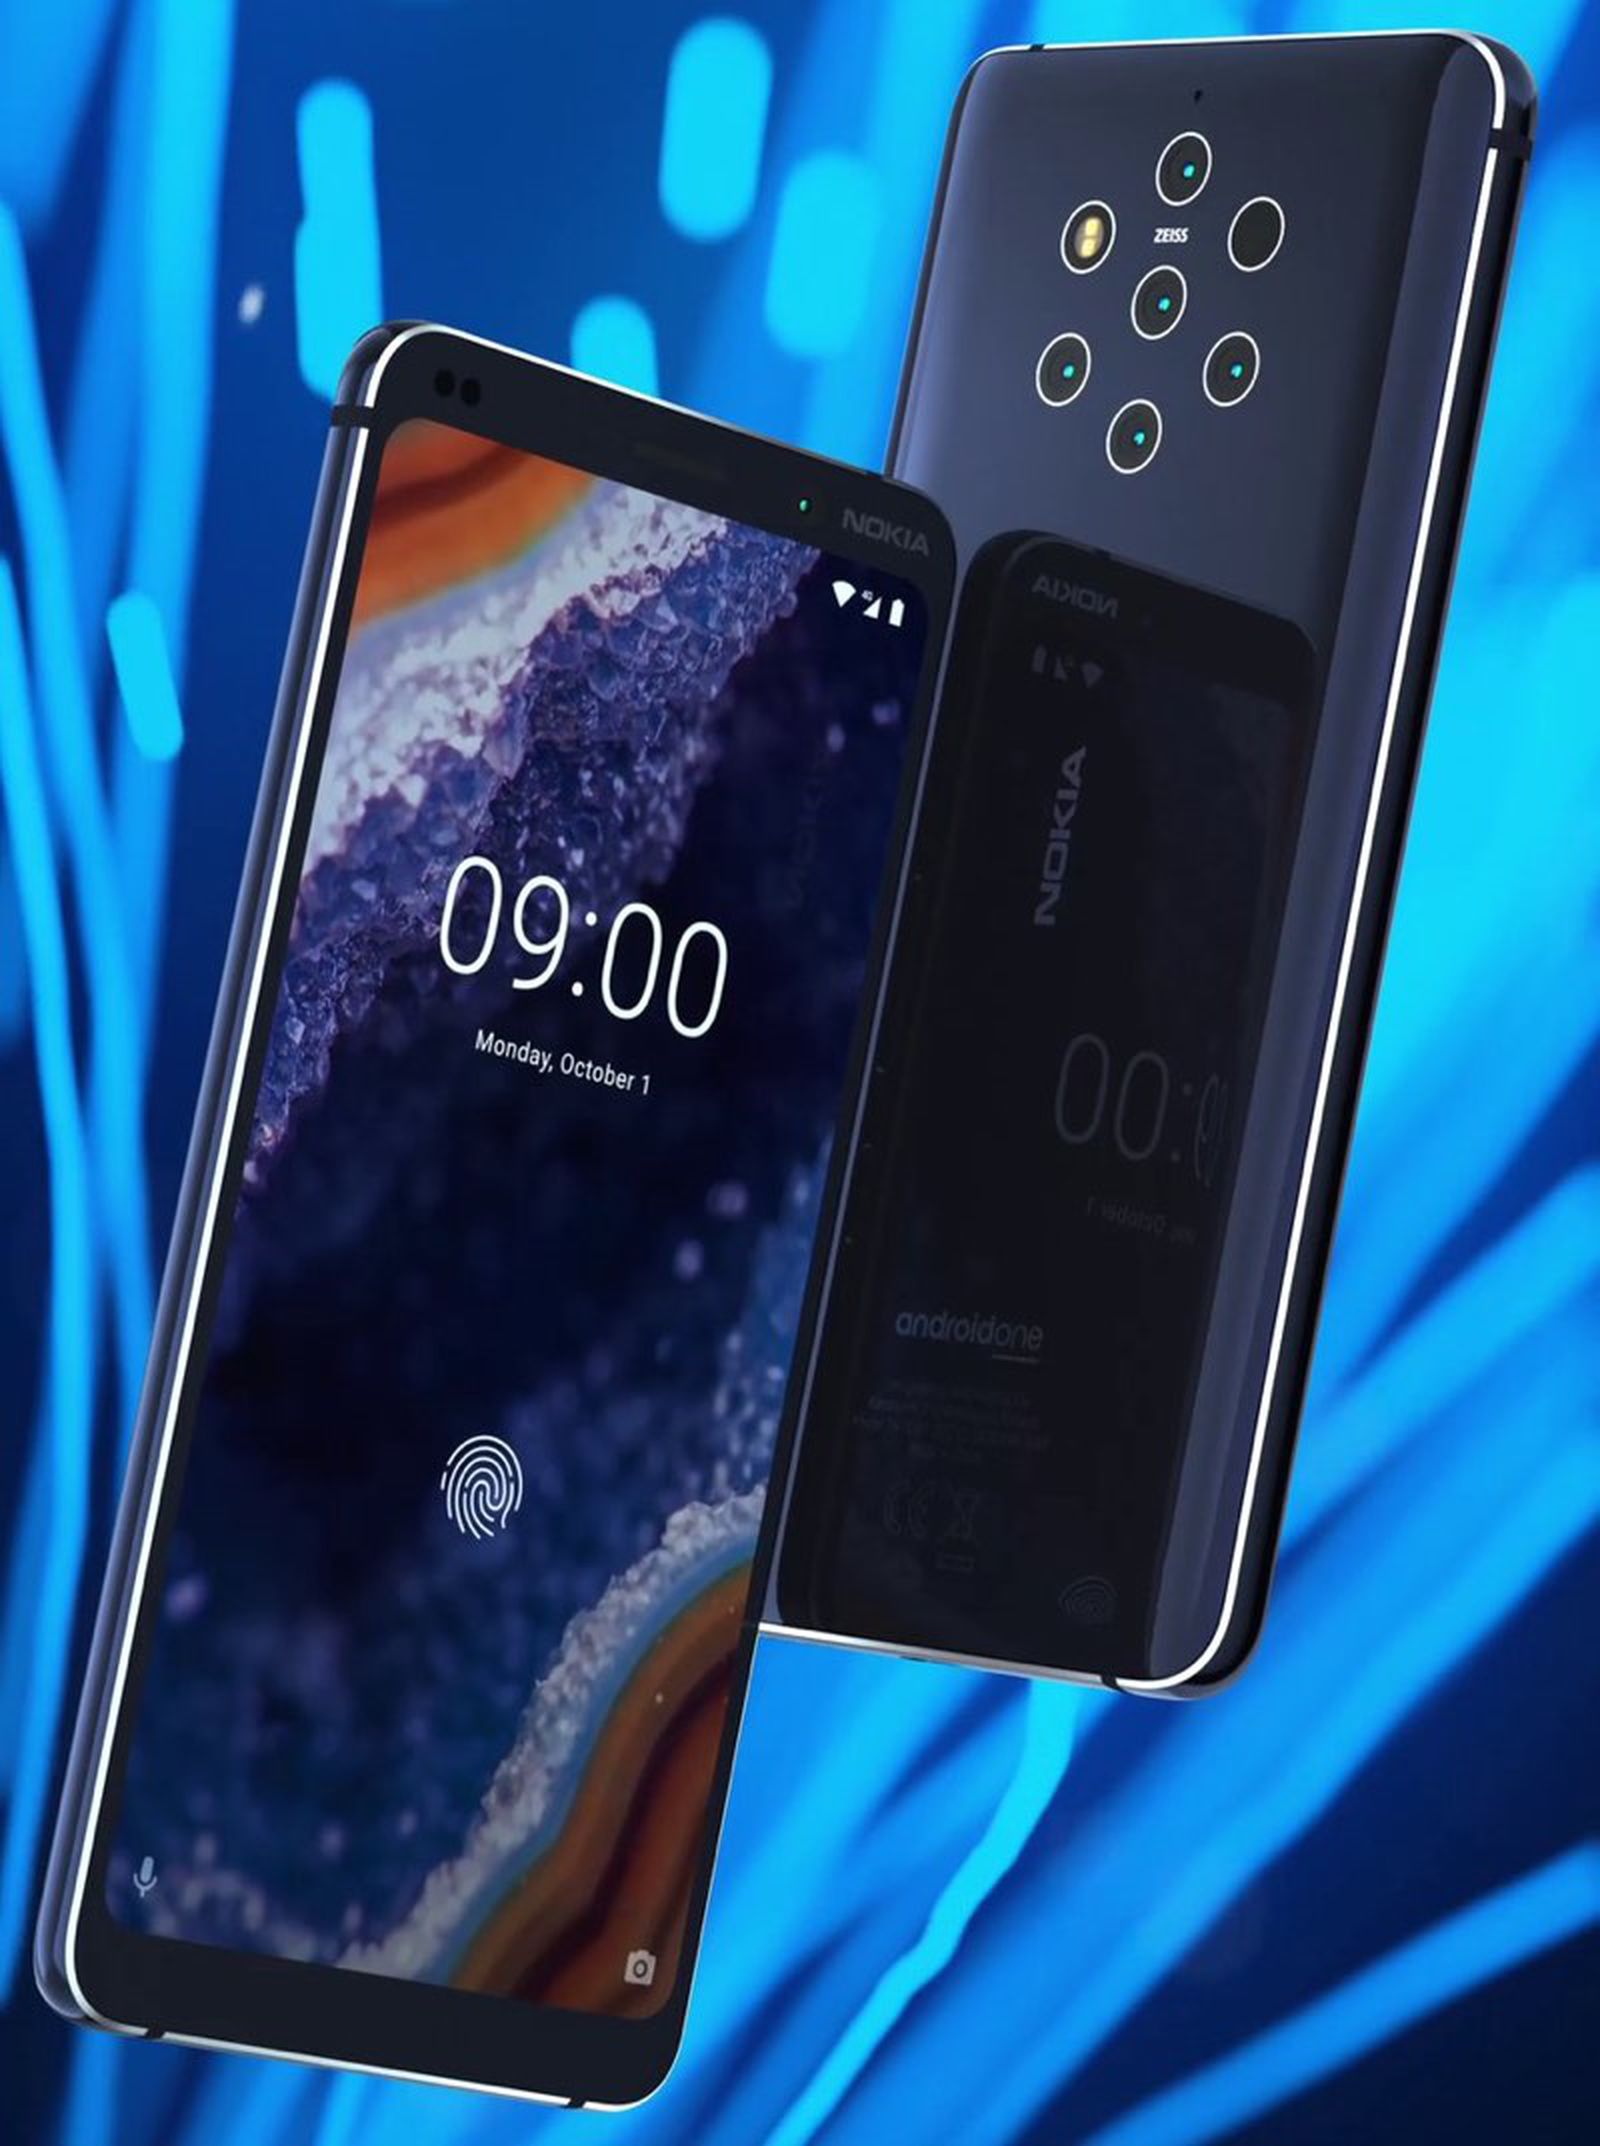 The Next Nokia Smartphone Will Feature Unique 5-Camera Setup MacRumors